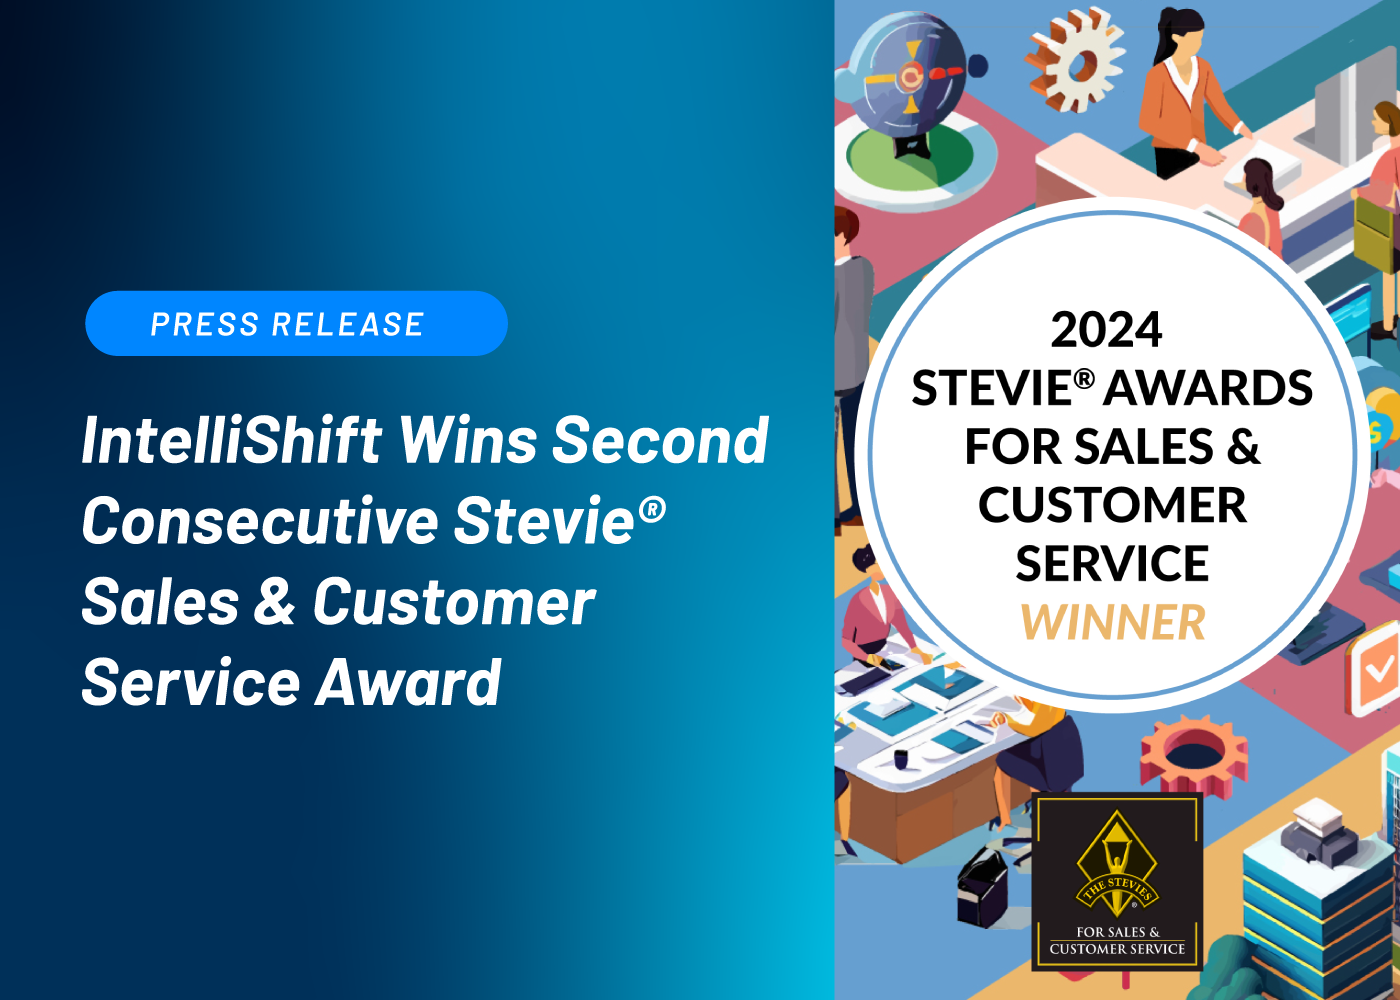 IntelliShift Wins Second Consecutive Stevie Sales & Customer Service Award